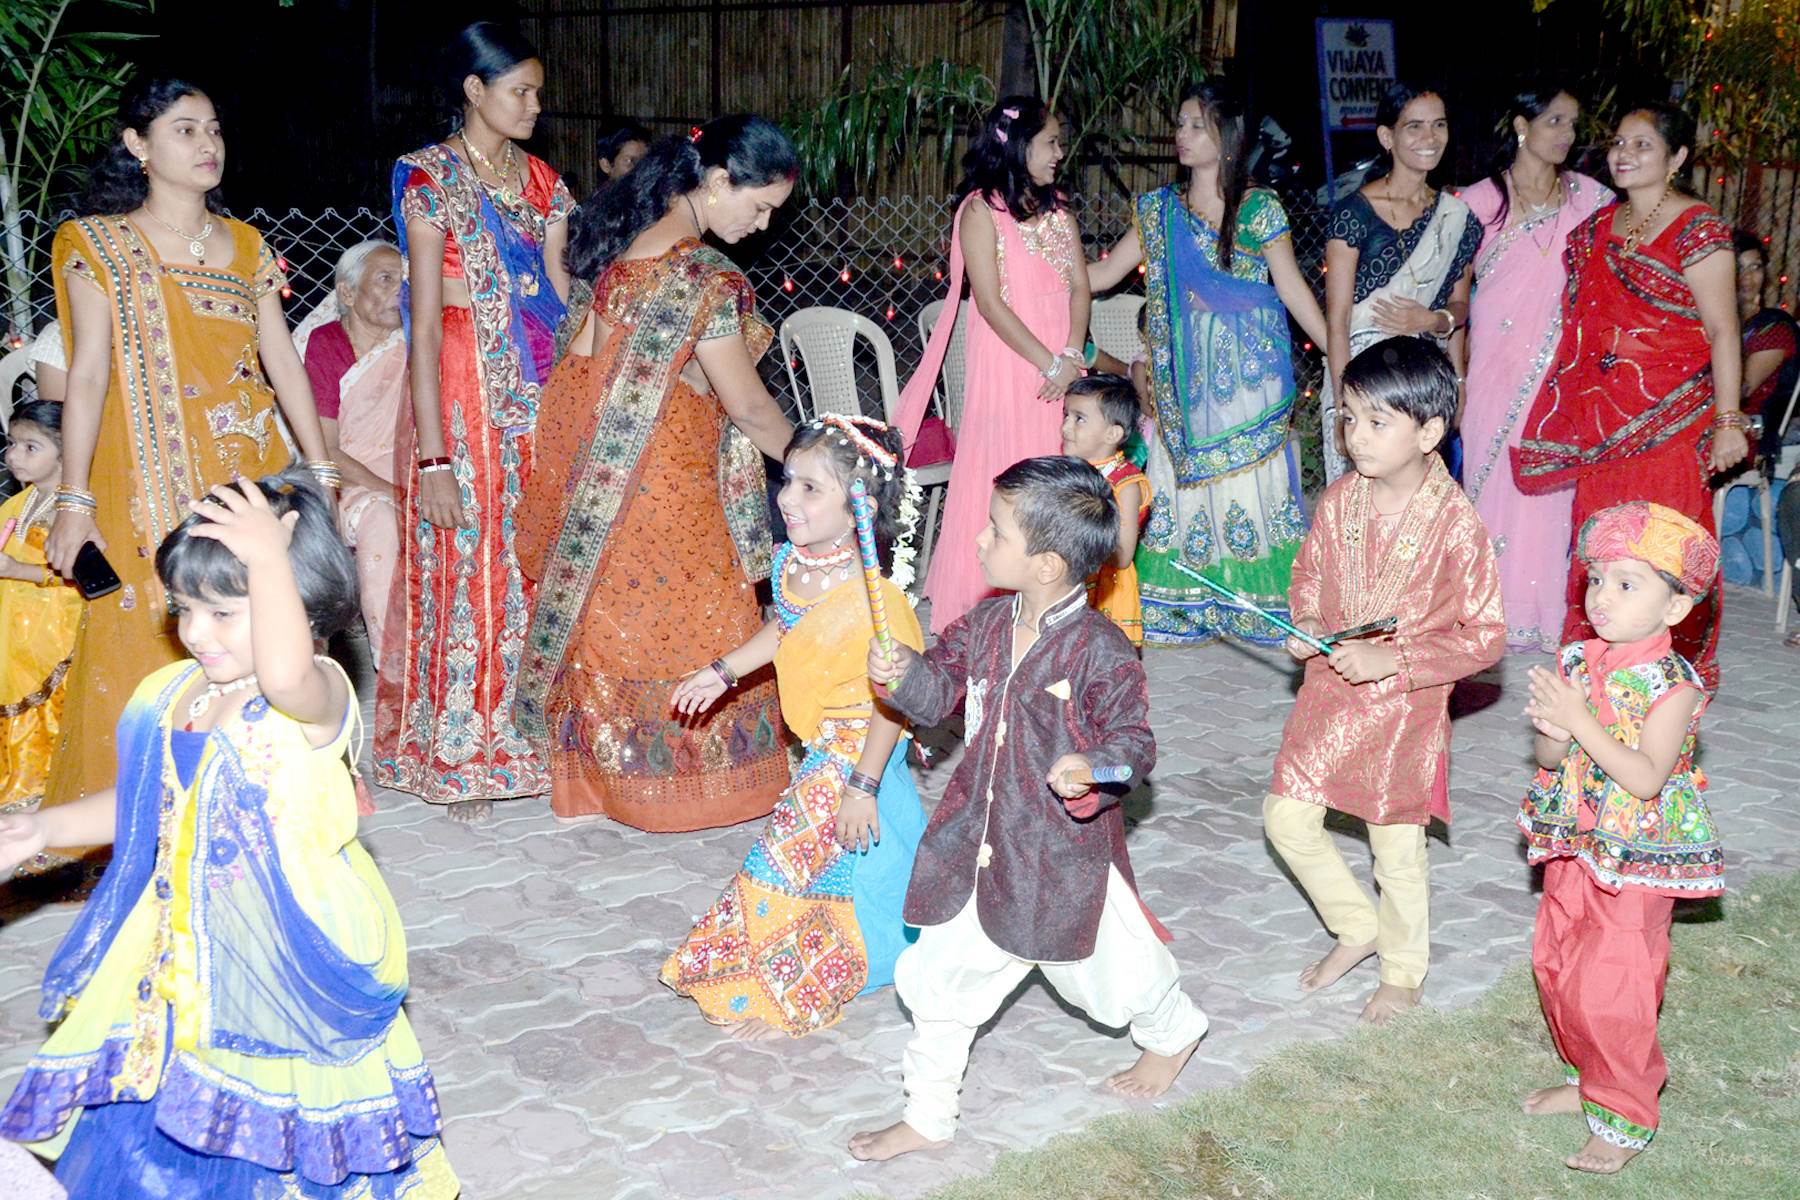 vijaya convent school dandiya celebration kids and teachers in the campus ground